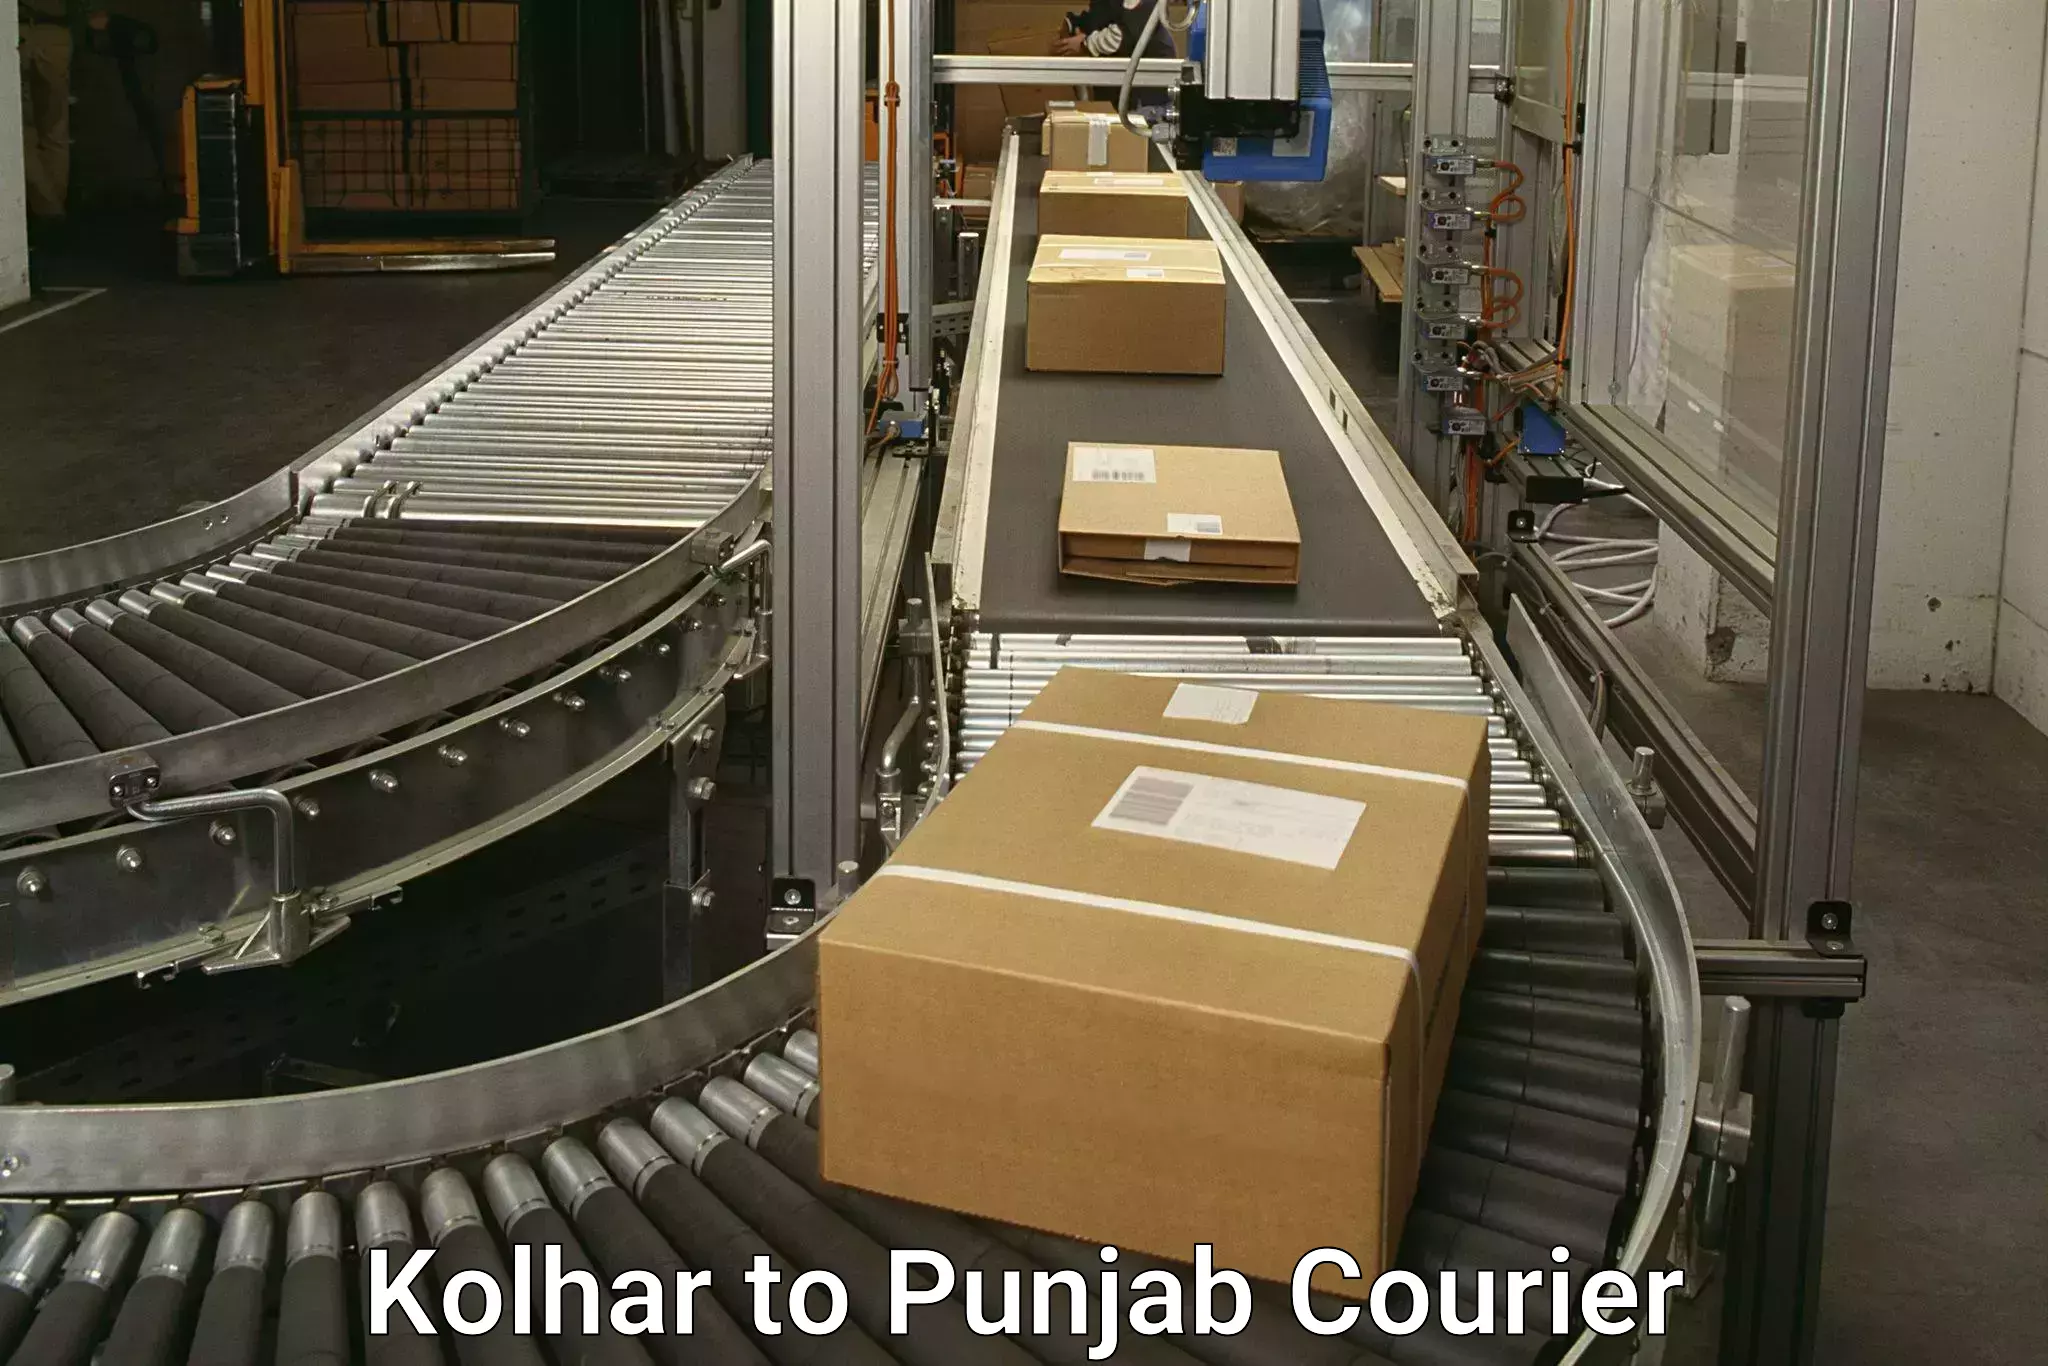 Courier service booking Kolhar to Bathinda